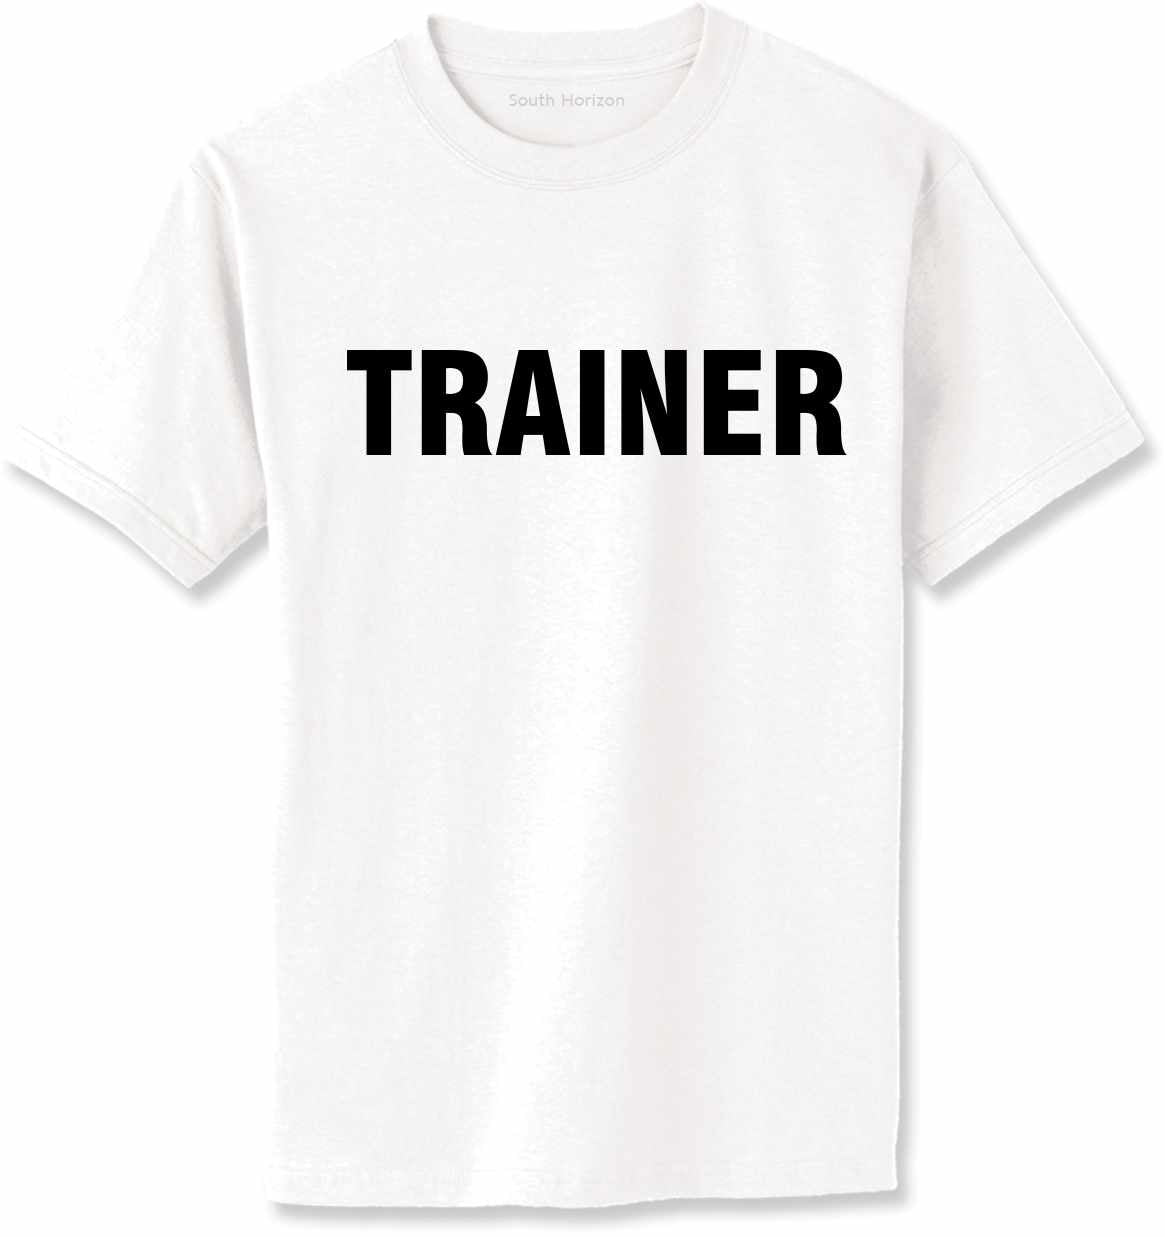 TRAINER Adult T-Shirt (#248-1)